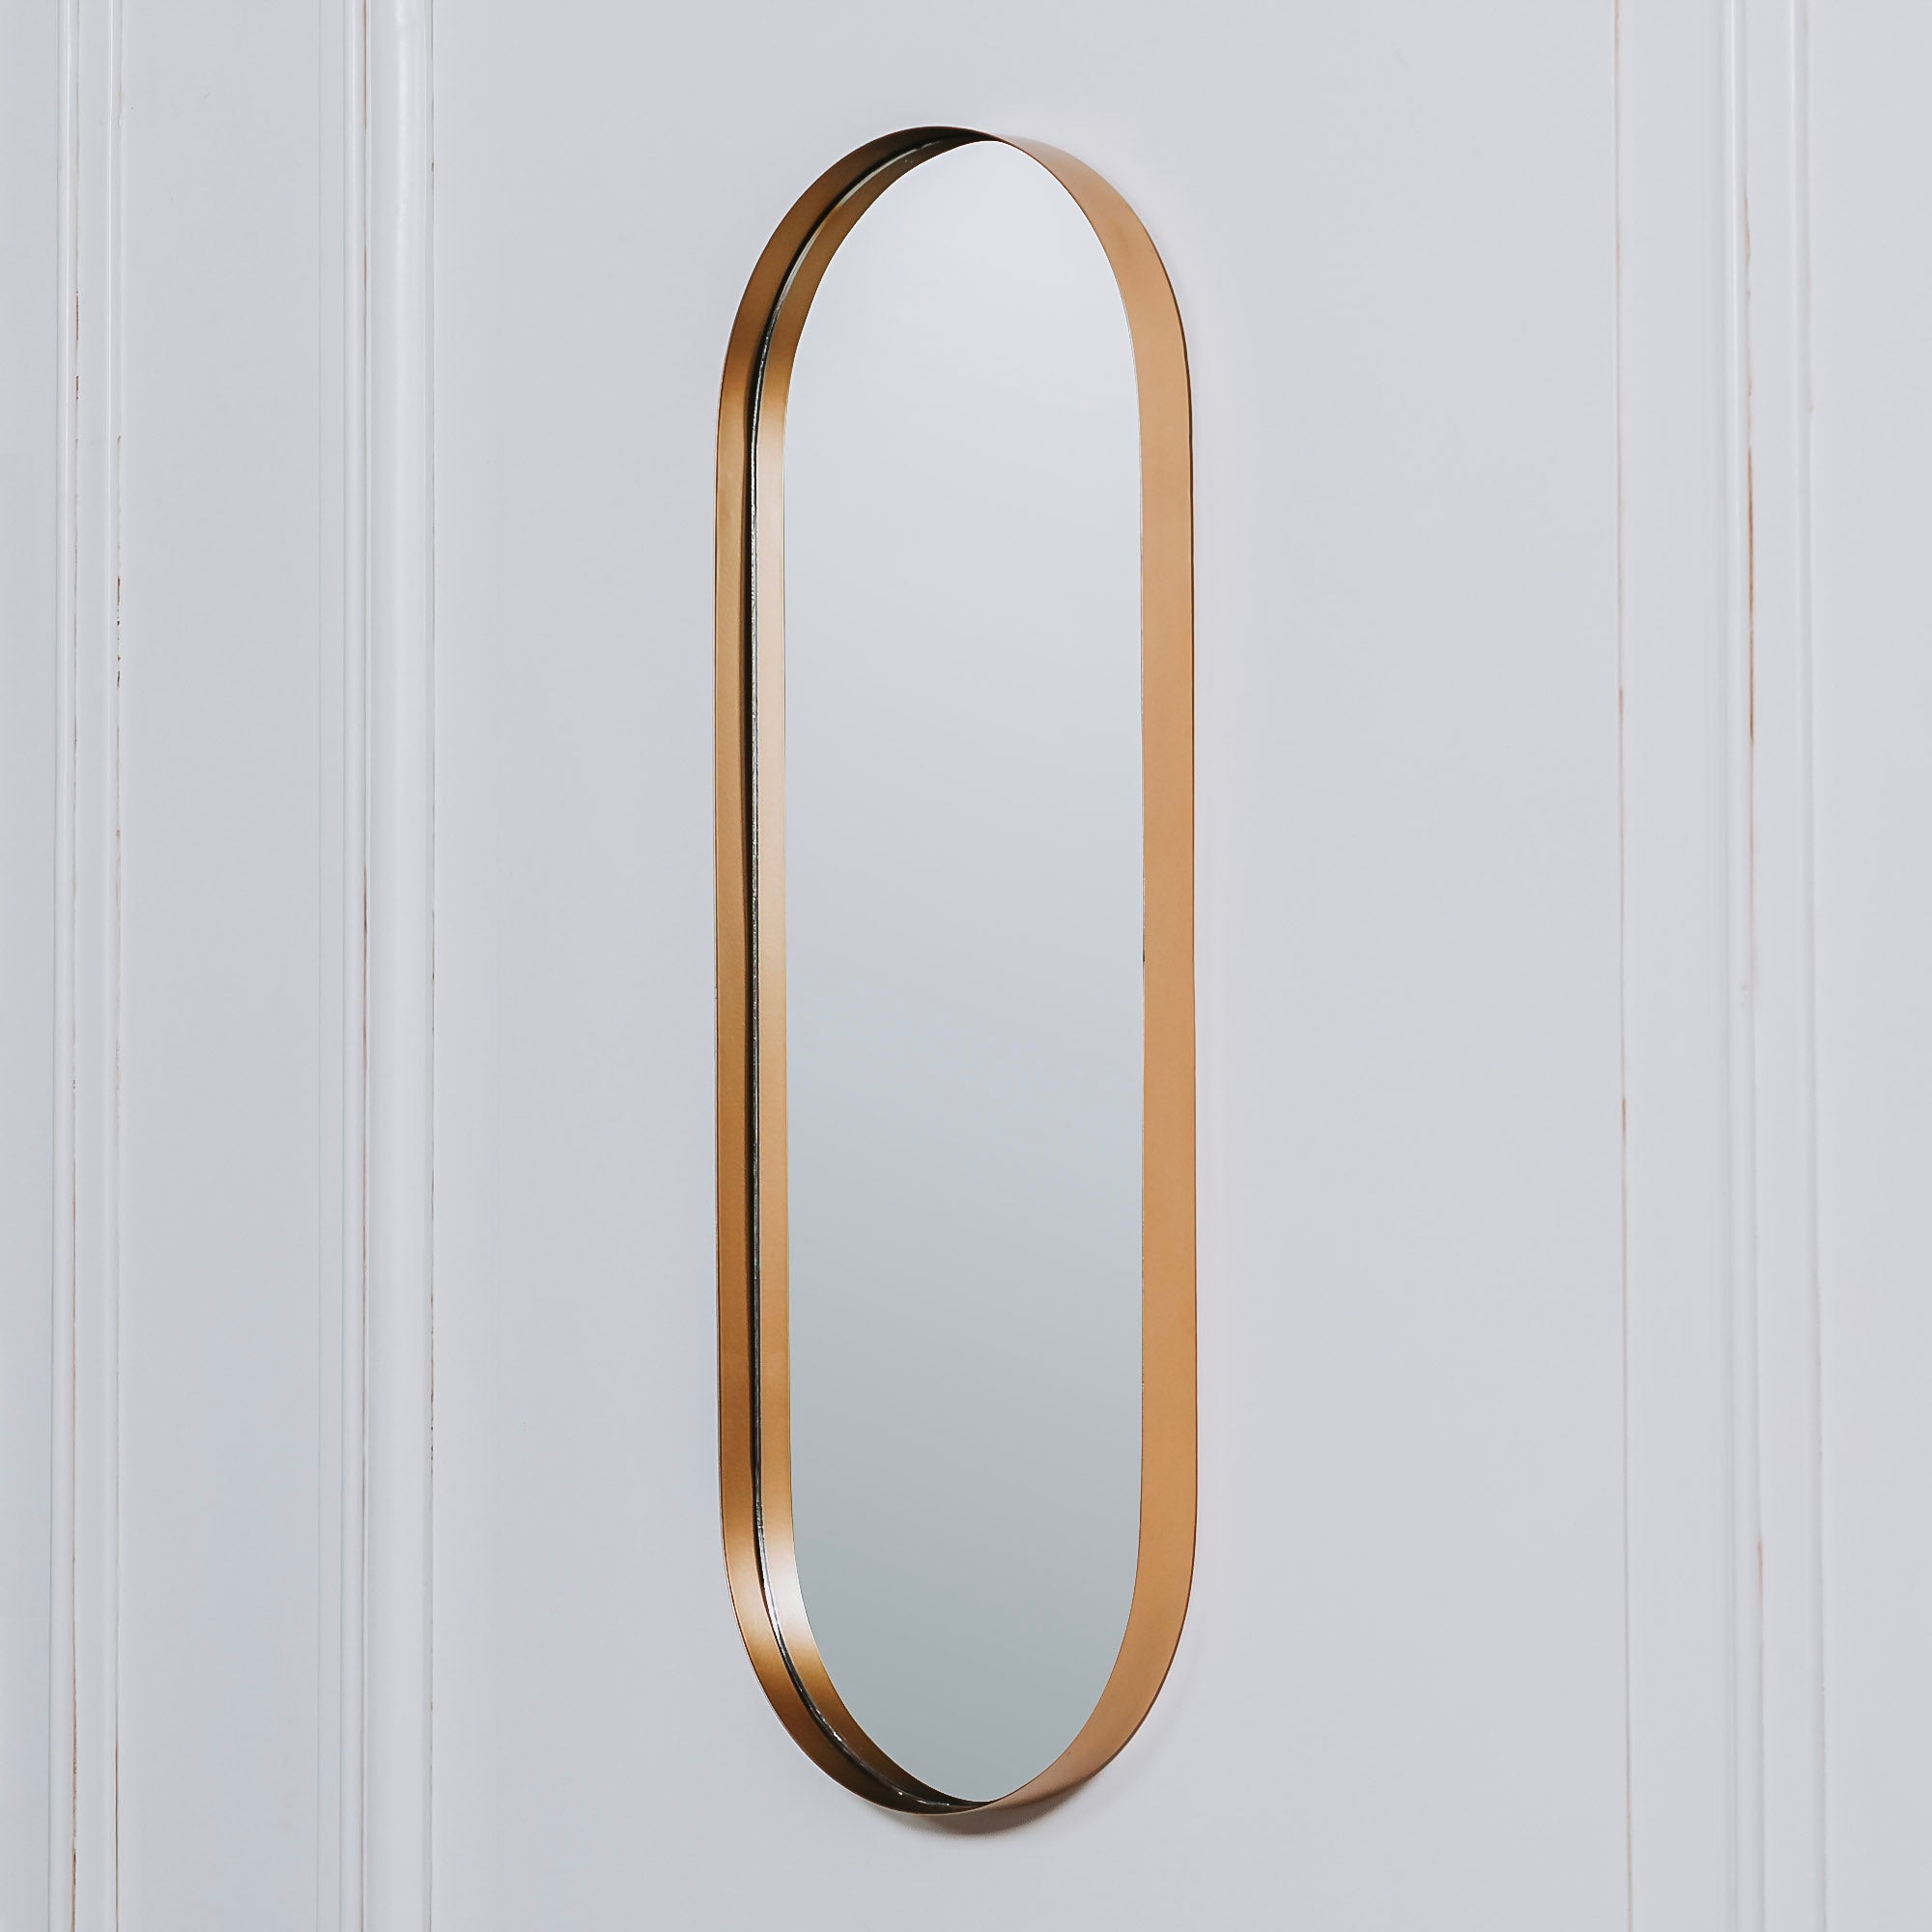 Pescara Slim Gold Oval Wall Mirror